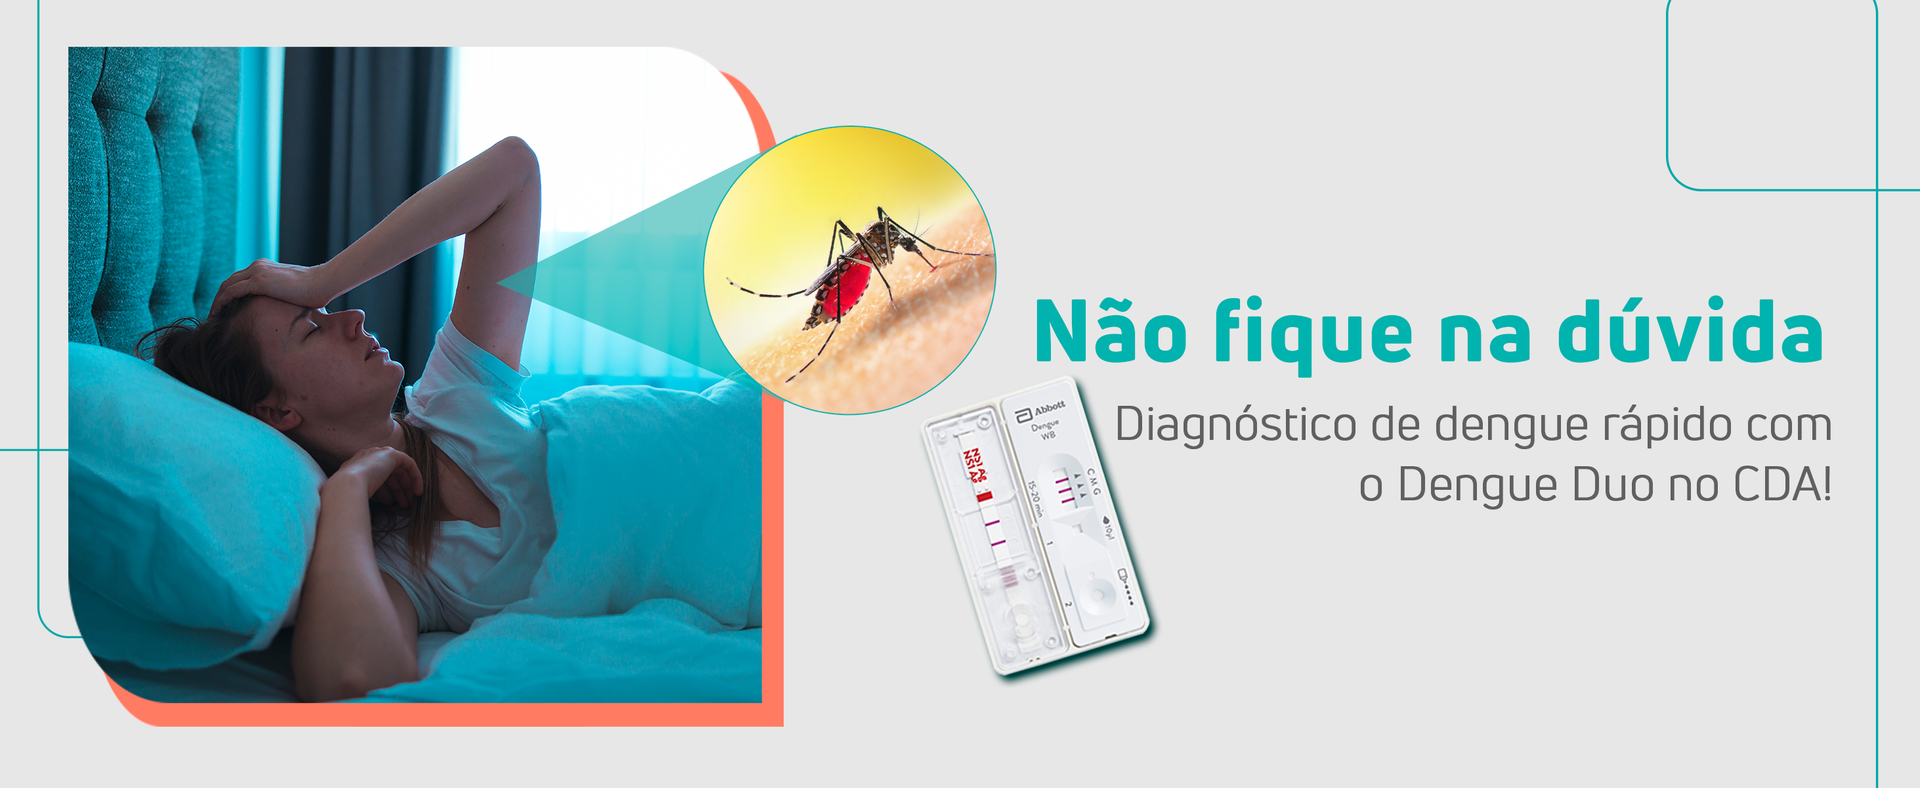 conteudo-sobre-teste-dengue-duo